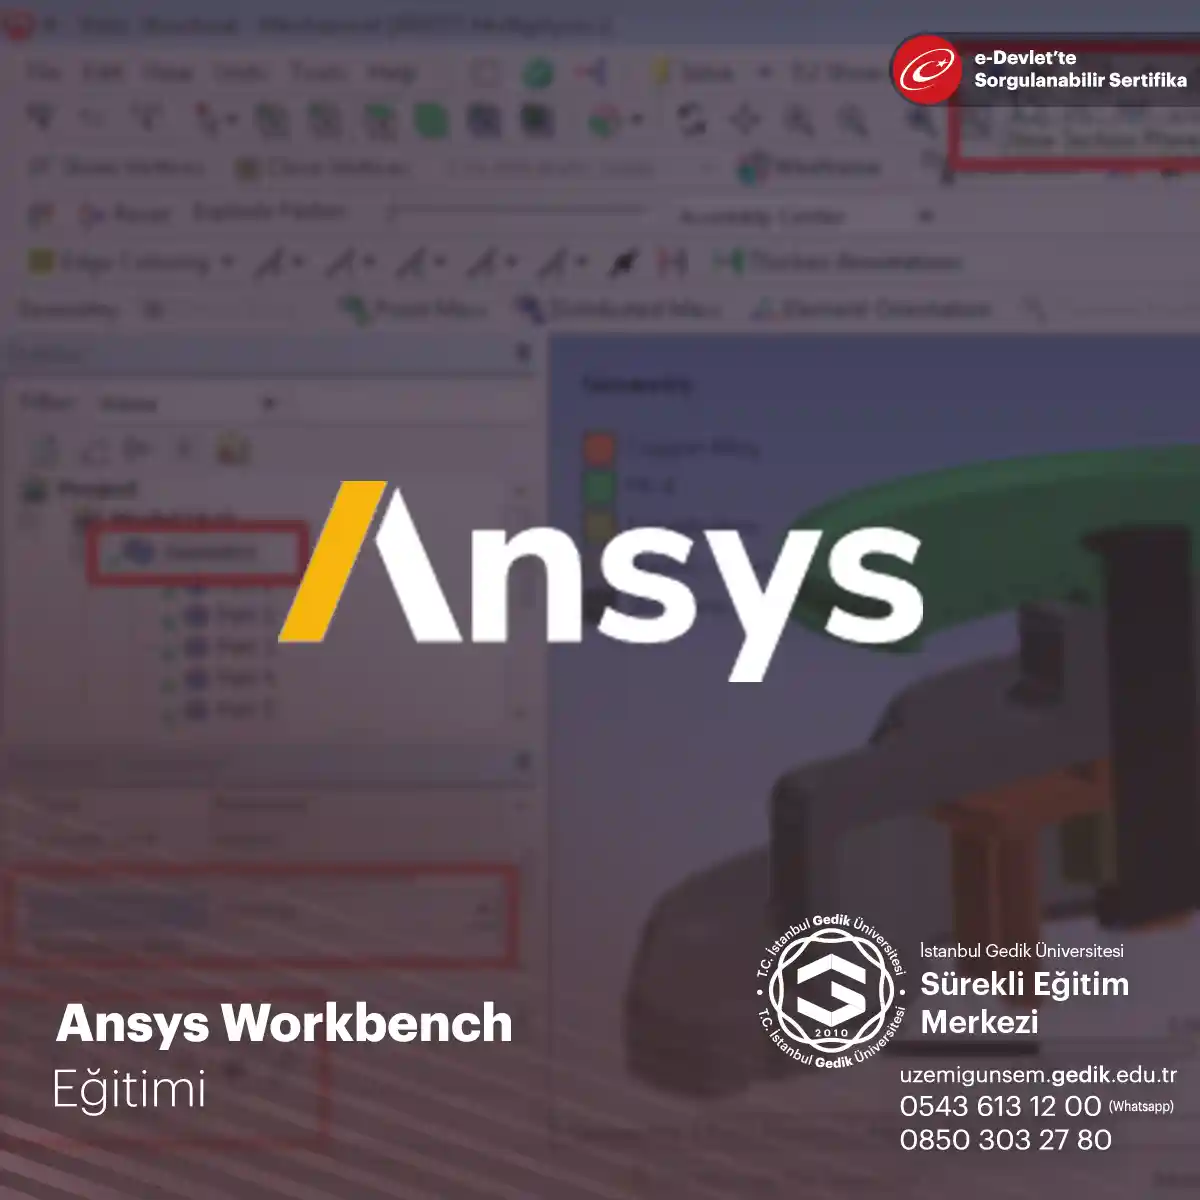 Ansys Workbench Eğitimi 2020 R2 Temel Seviye Analiz Sertifika Programı